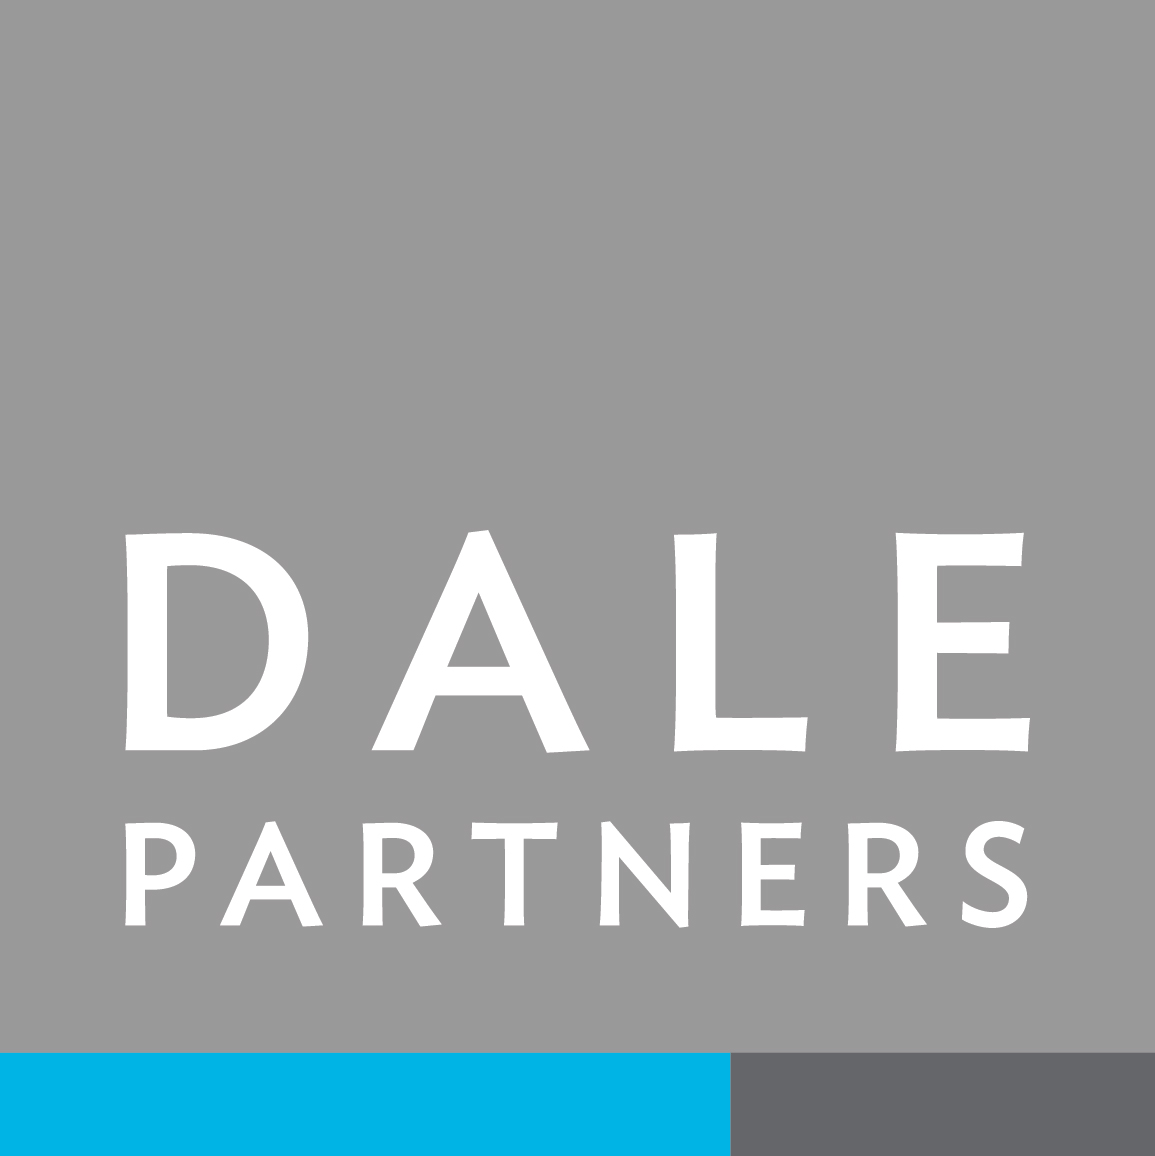 Dale Partner Architects